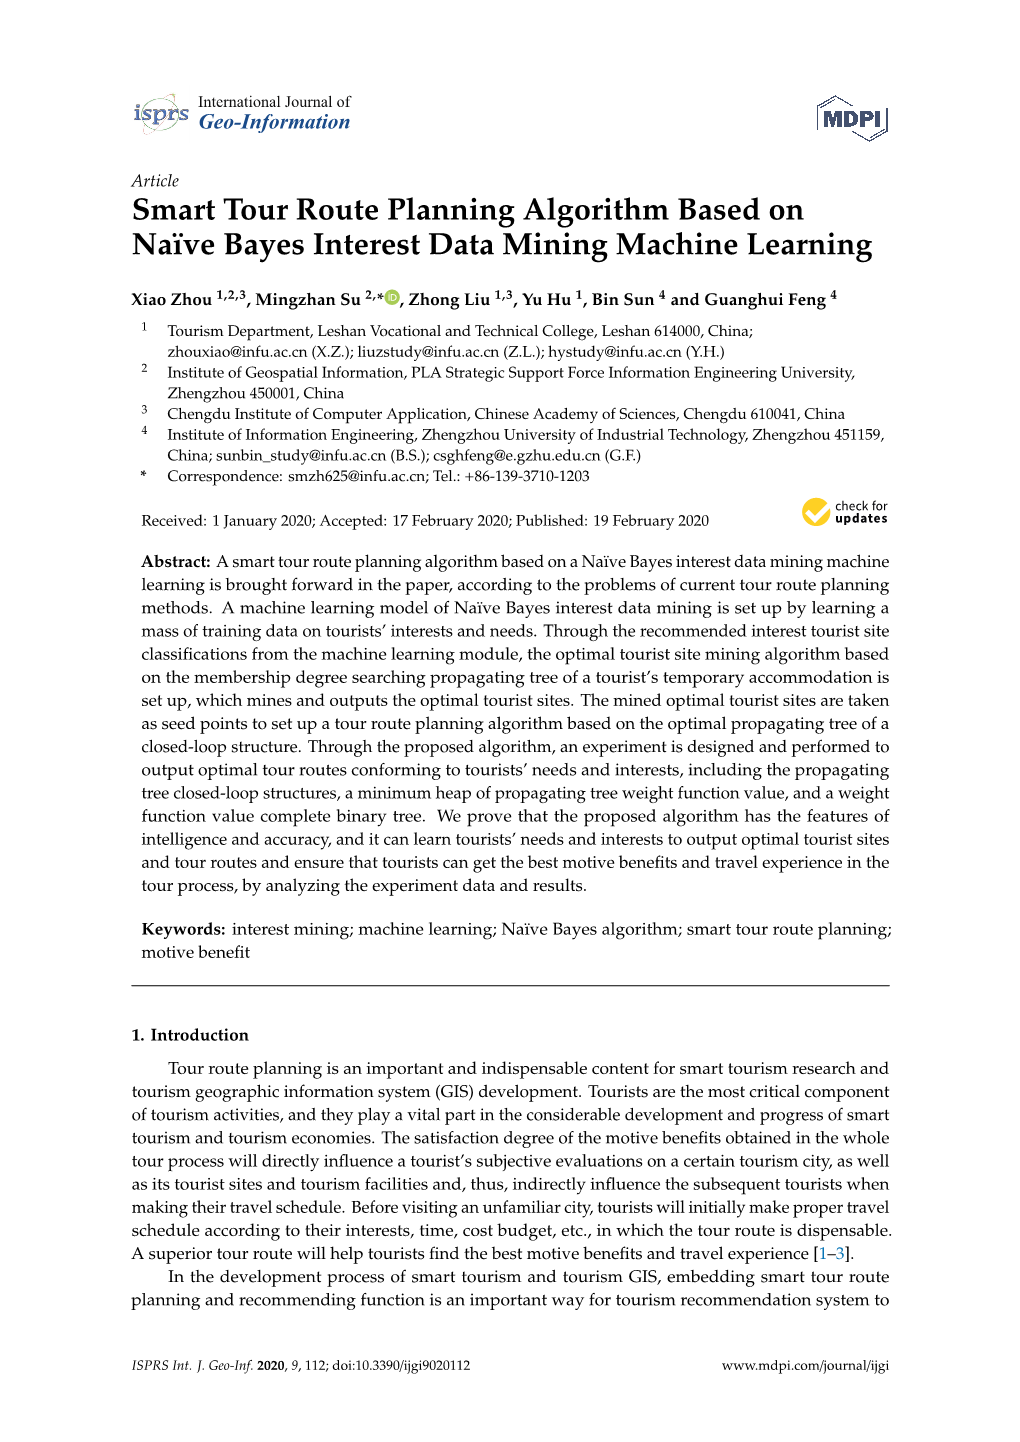 Smart Tour Route Planning Algorithm Based on Naïve Bayes Interest Data Mining Machine Learning